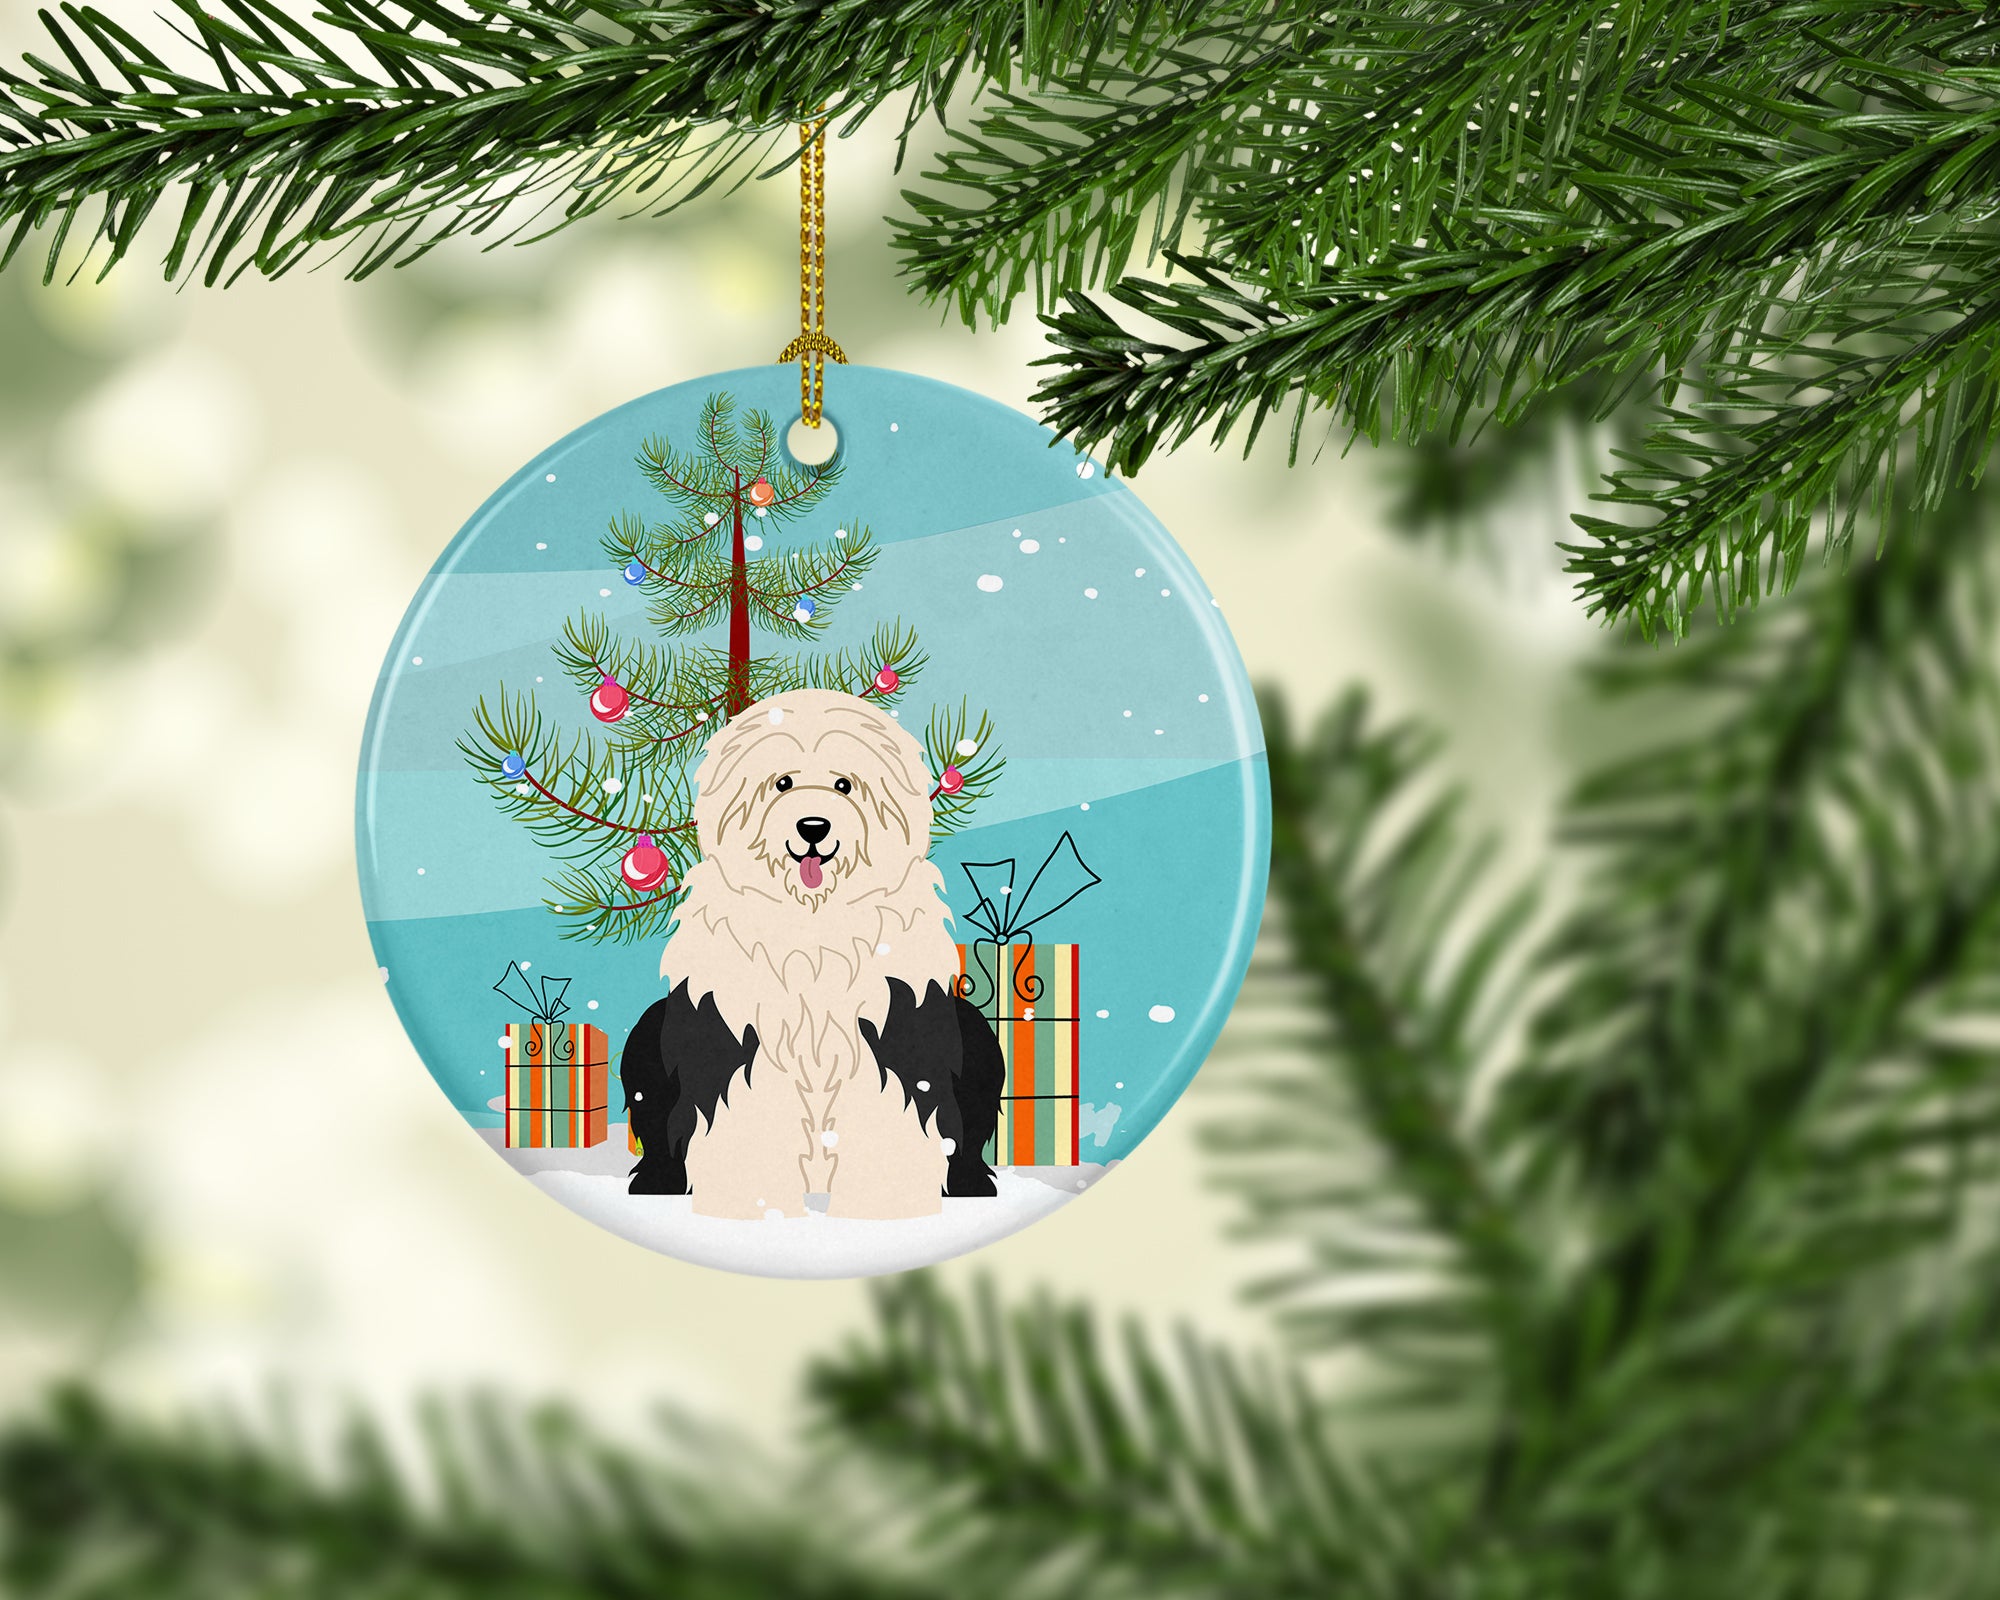 Merry Christmas Tree Old English Sheepdog Ceramic Ornament BB4221CO1 - the-store.com